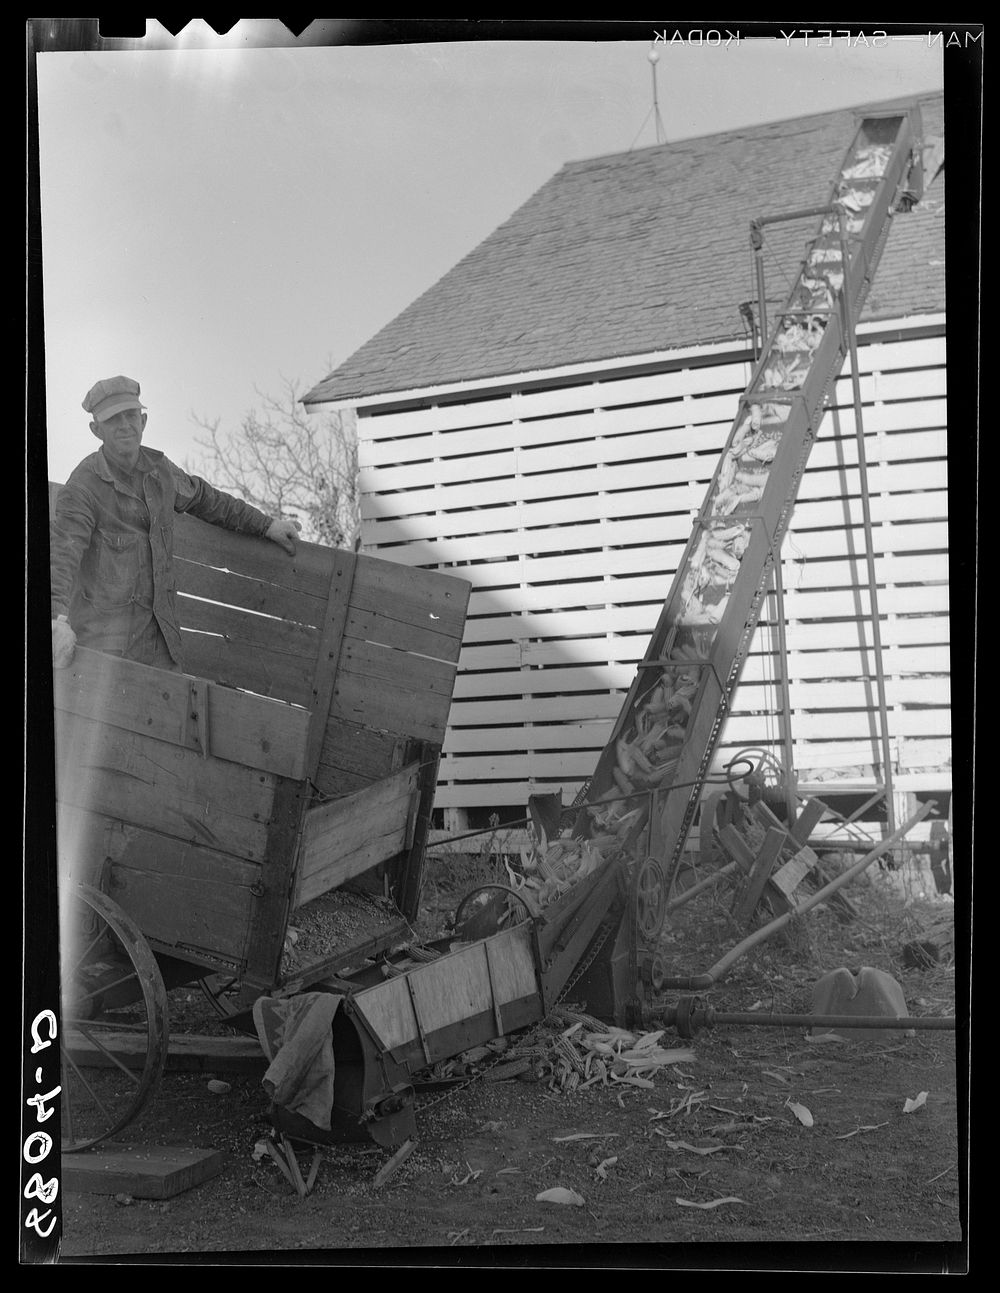 Loading corn into crib. Otoe County, Nebraska. Sourced from the Library of Congress.